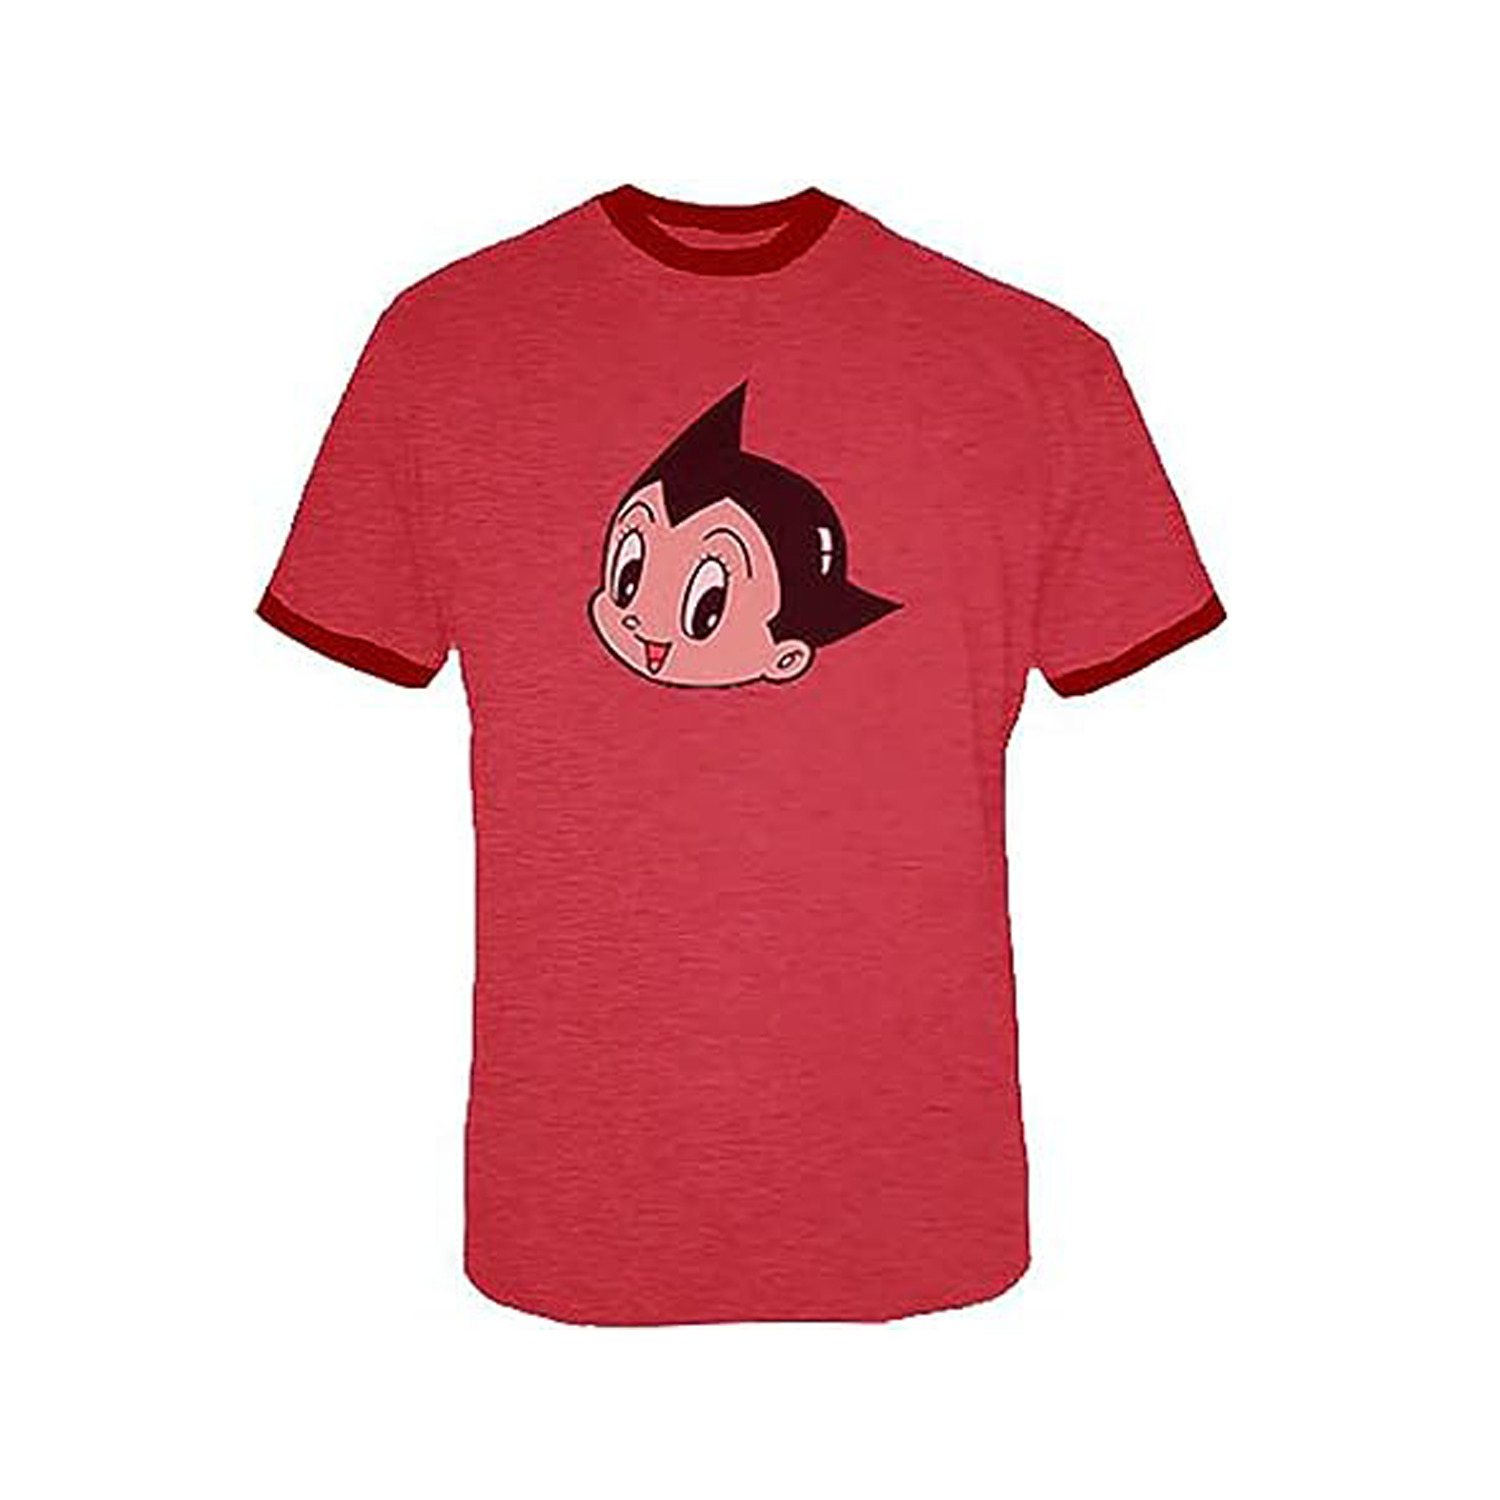 Adult Astro Boy Scott Pilgrim vs. The World Heather Red T-Shirt Graphic Tee